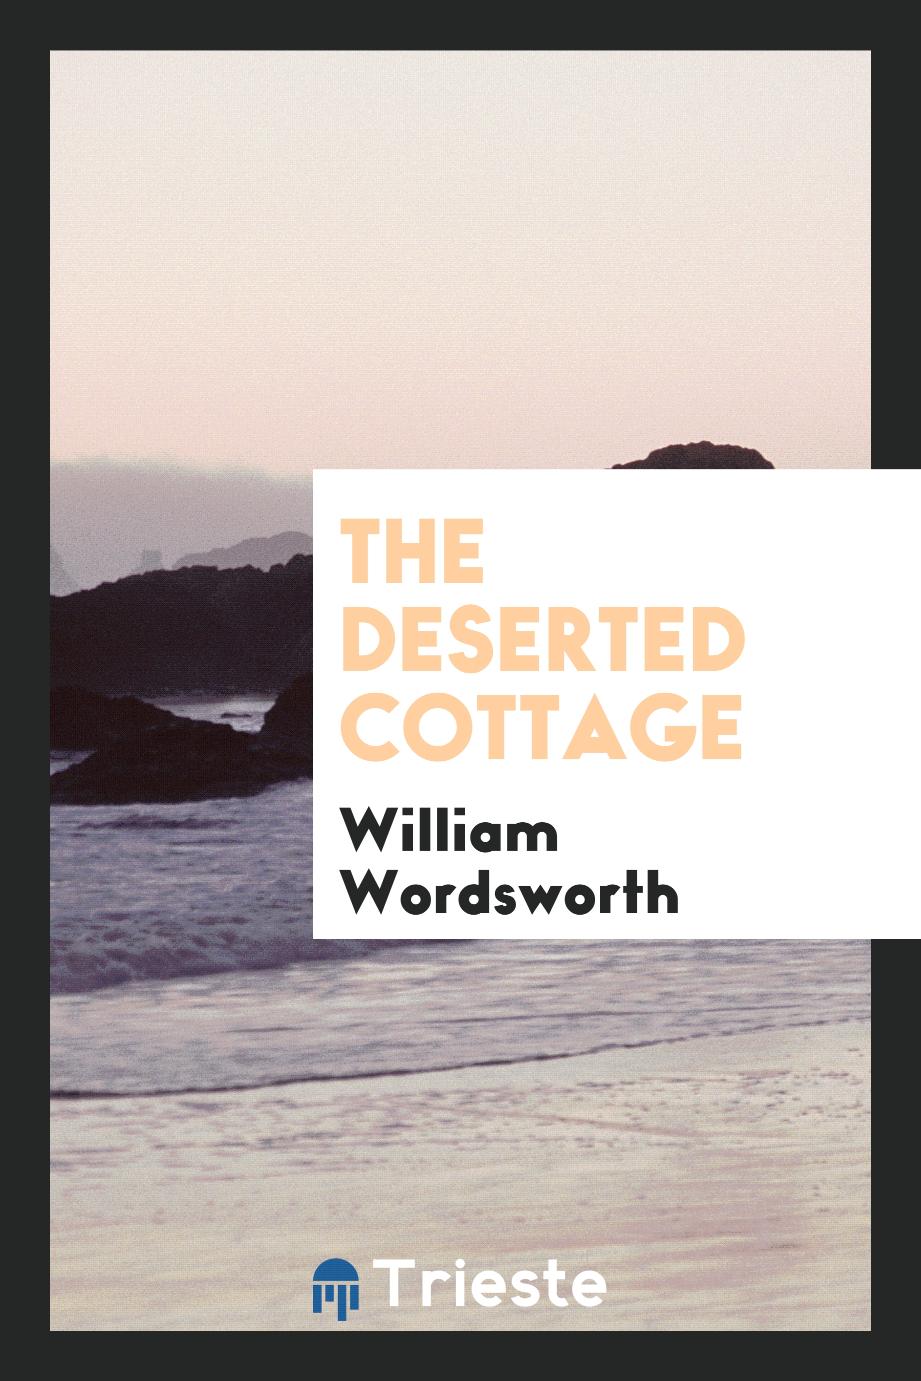 William Wordsworth - The Deserted Cottage